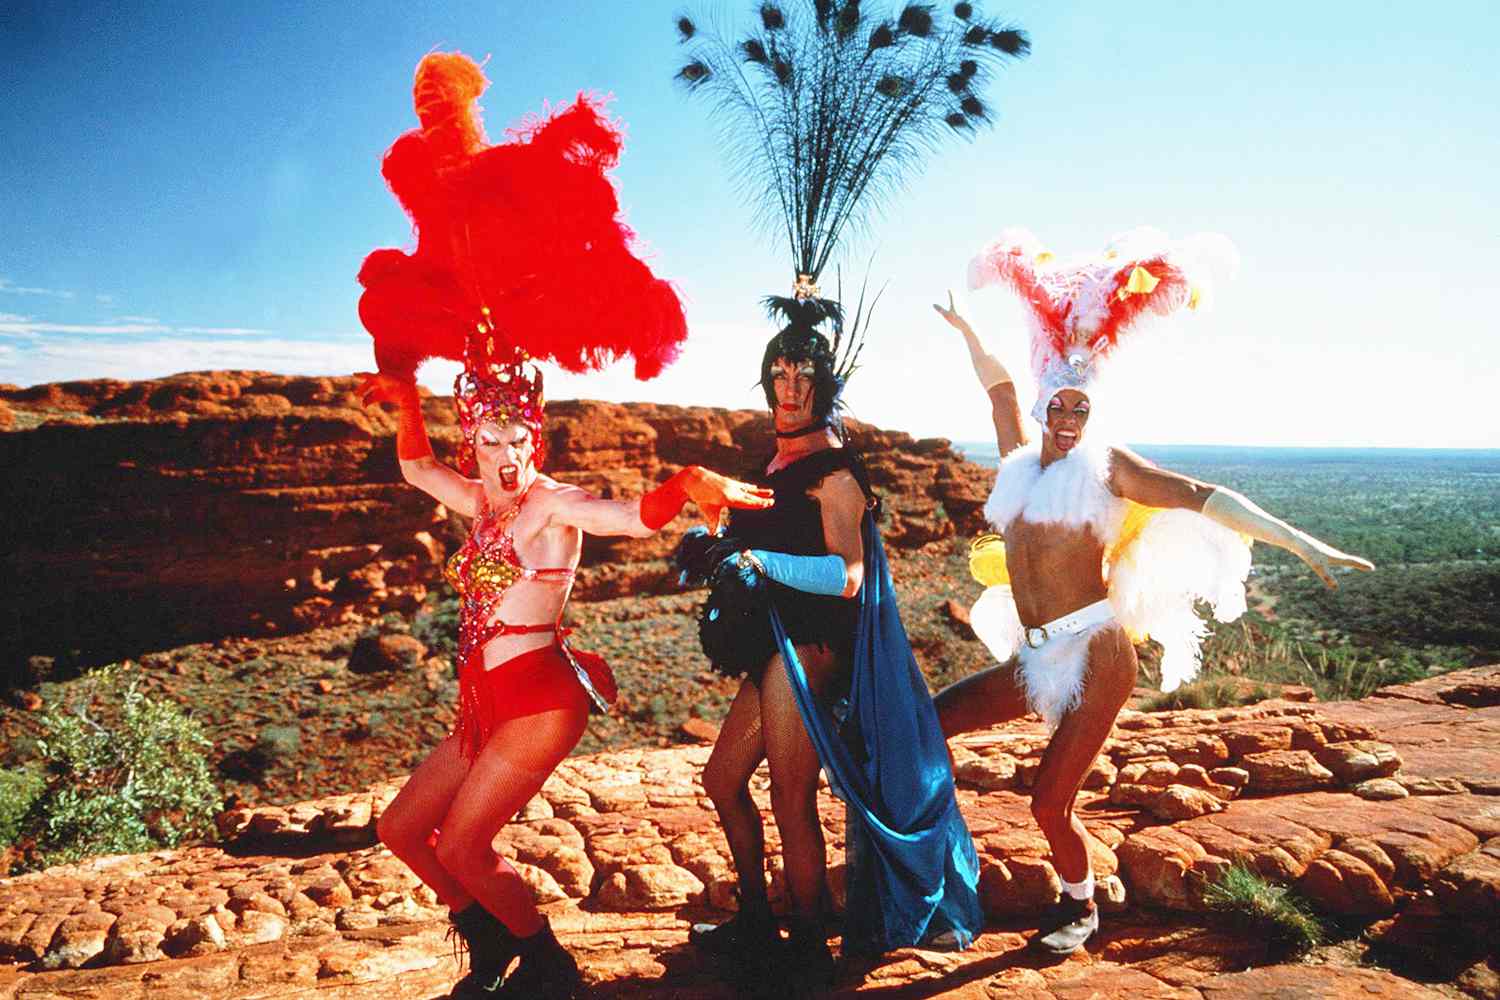 “priscilla, queen of the desert” sequel happening with original stars 30 years after the groundbreaking film